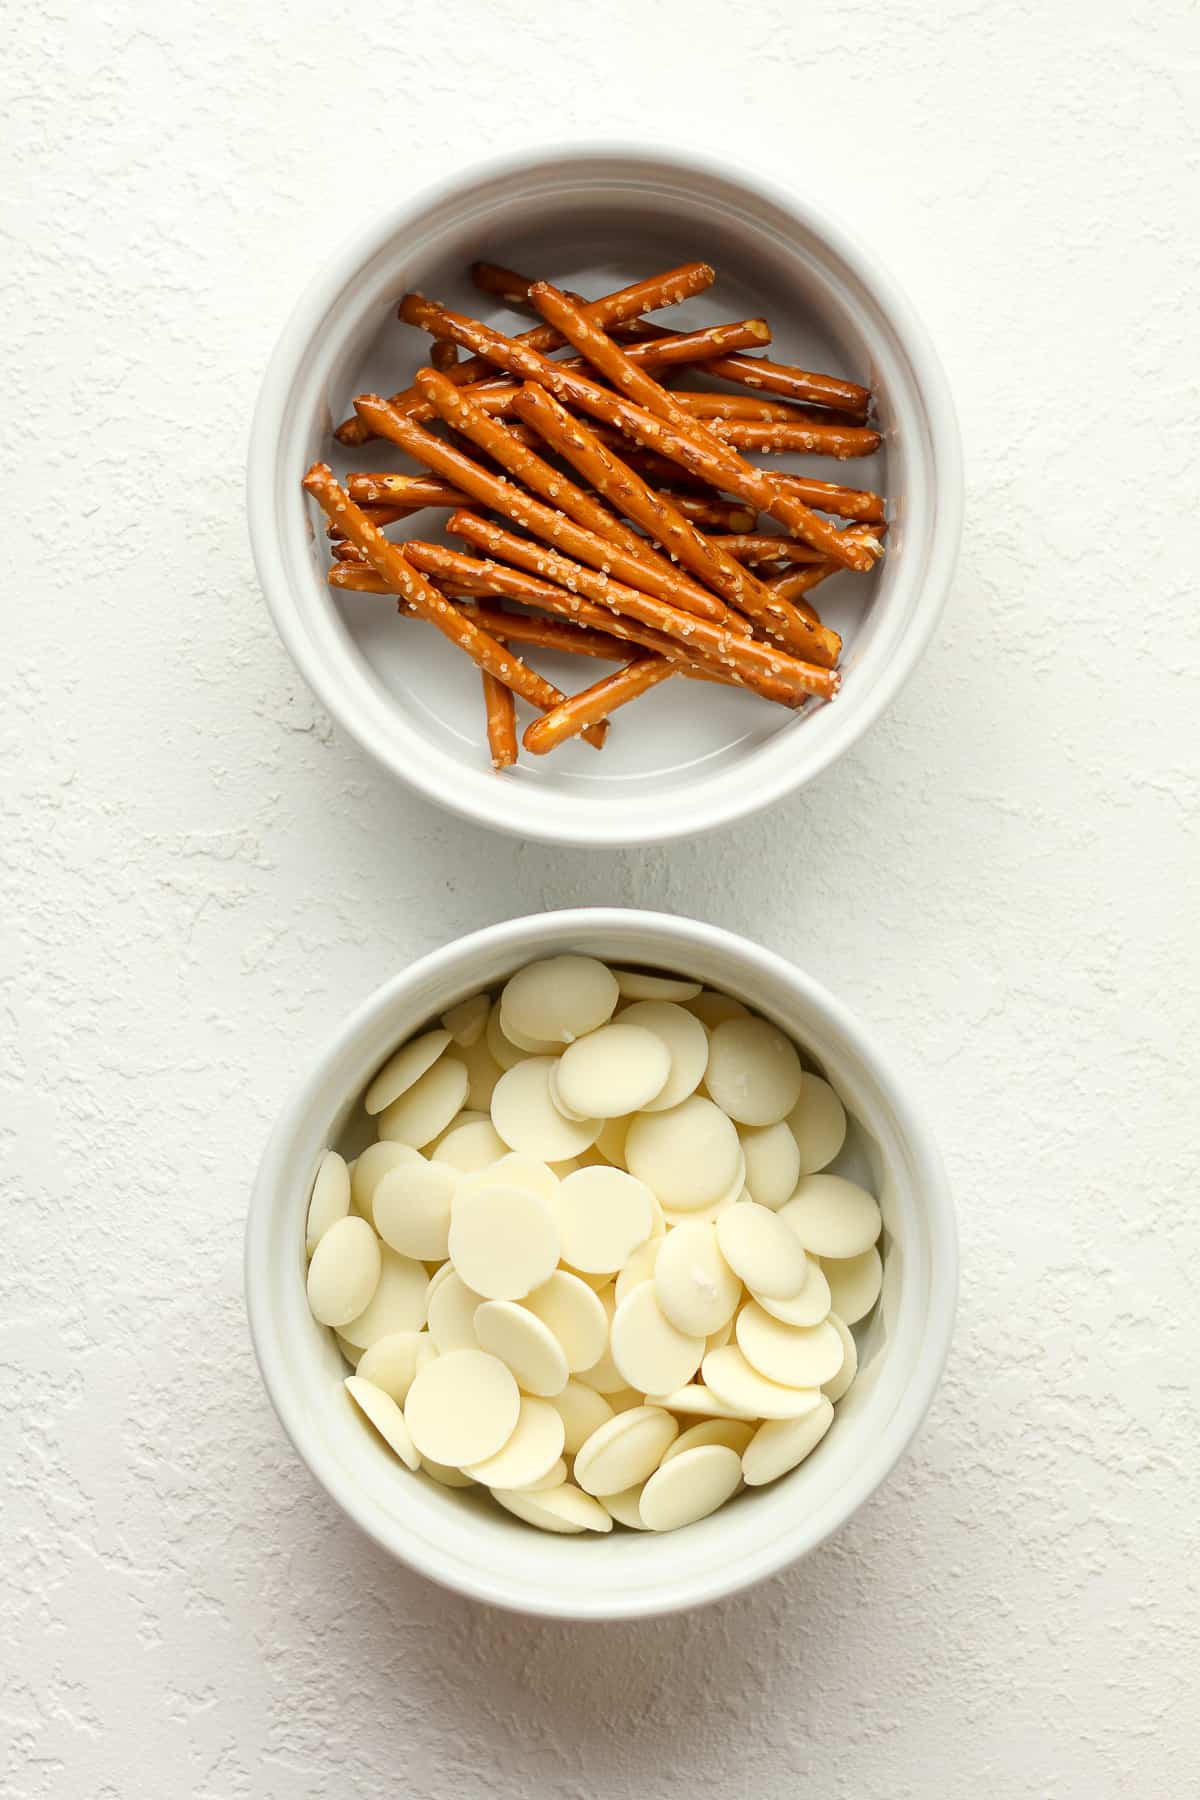 Bowls of pretzel sticks and white chocolate melts.